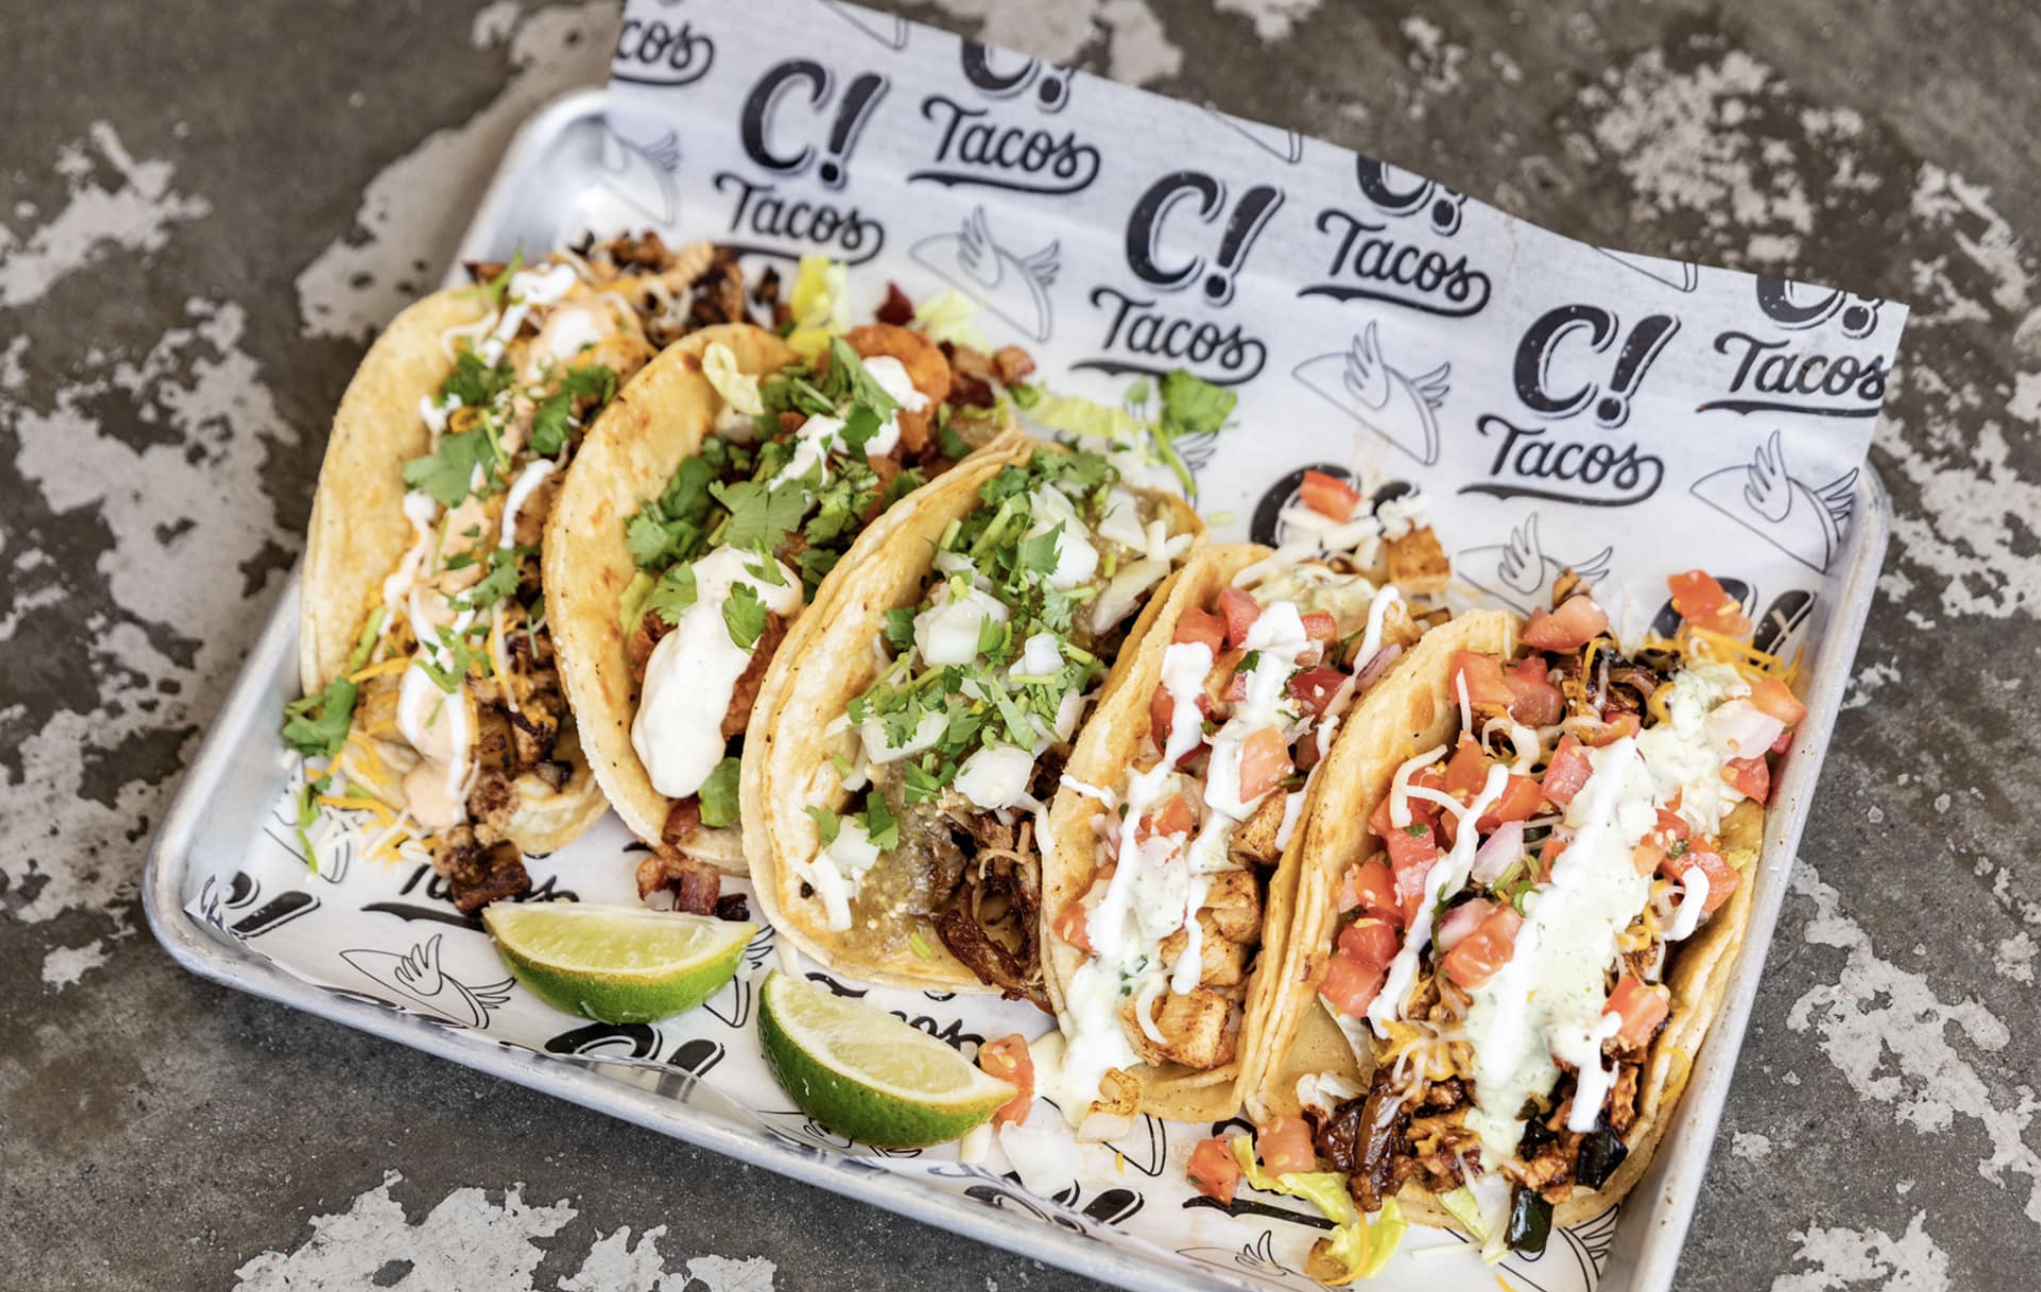 Capital Tacos to Open Soon in Loveland